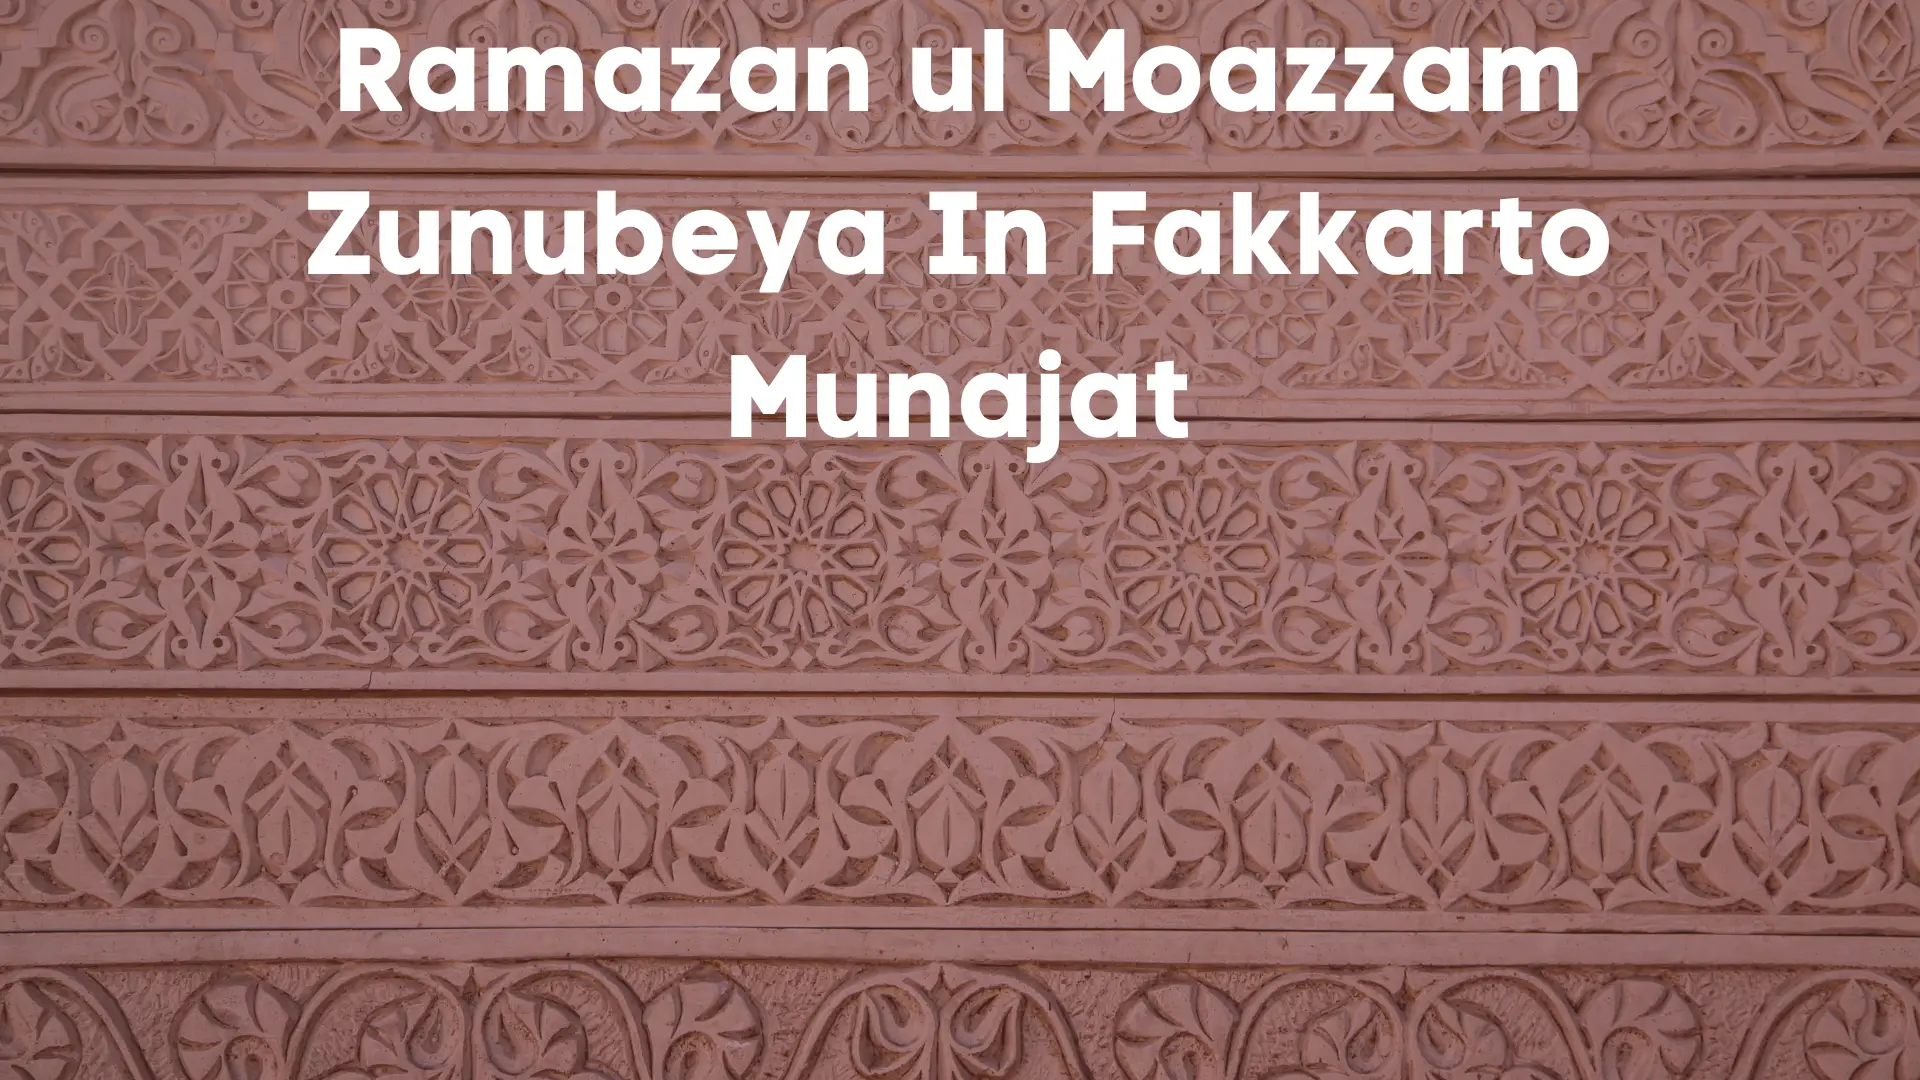 Ramazan ul Moazzam Zunubeya In Fakkarto Munajat